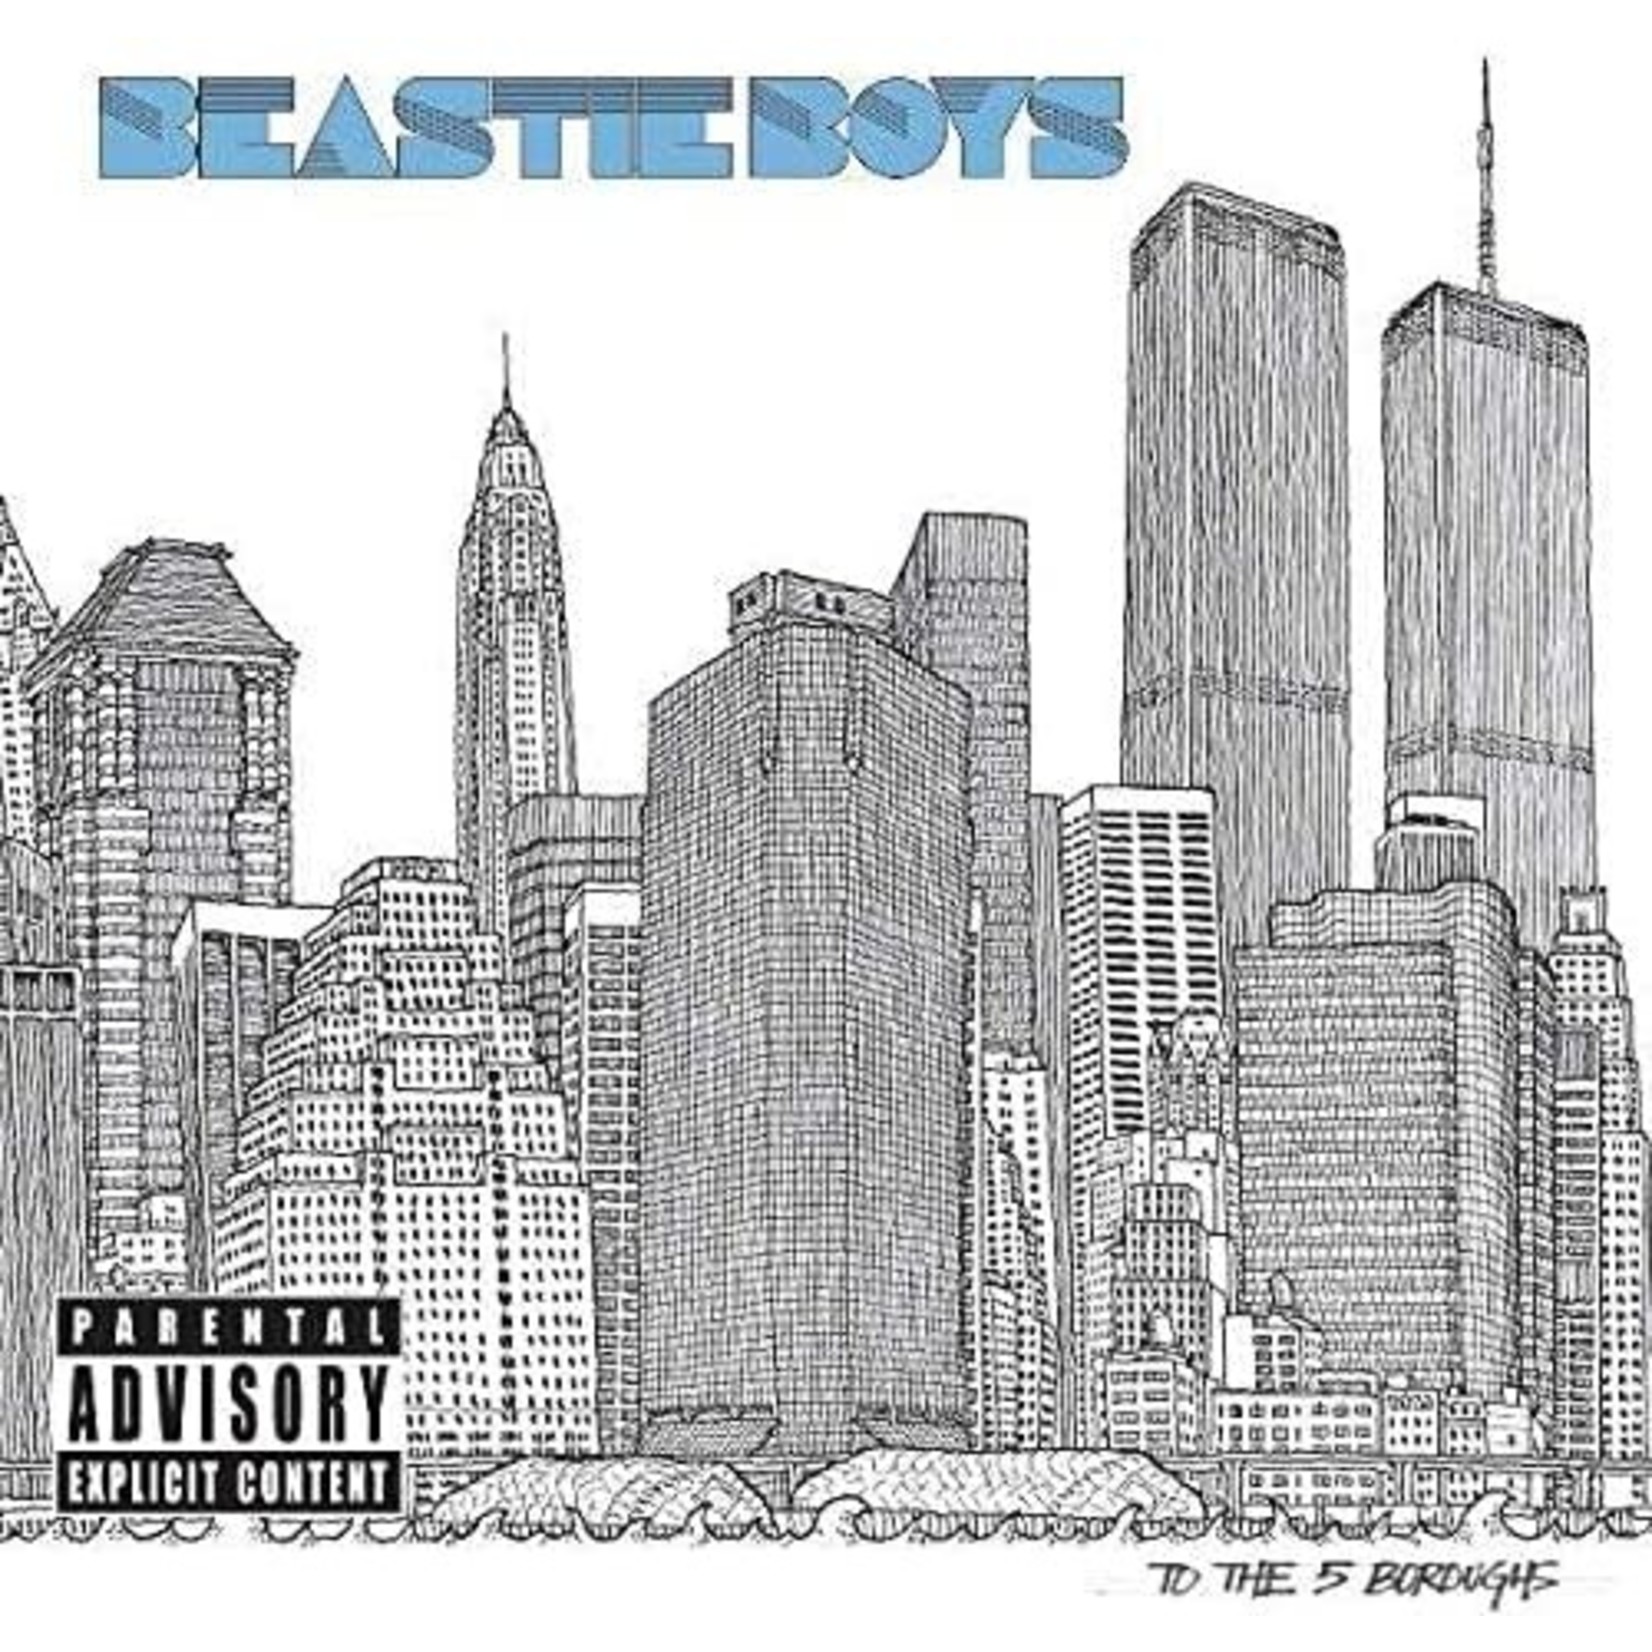 Beastie Boys - To The 5 Boroughs [2LP]